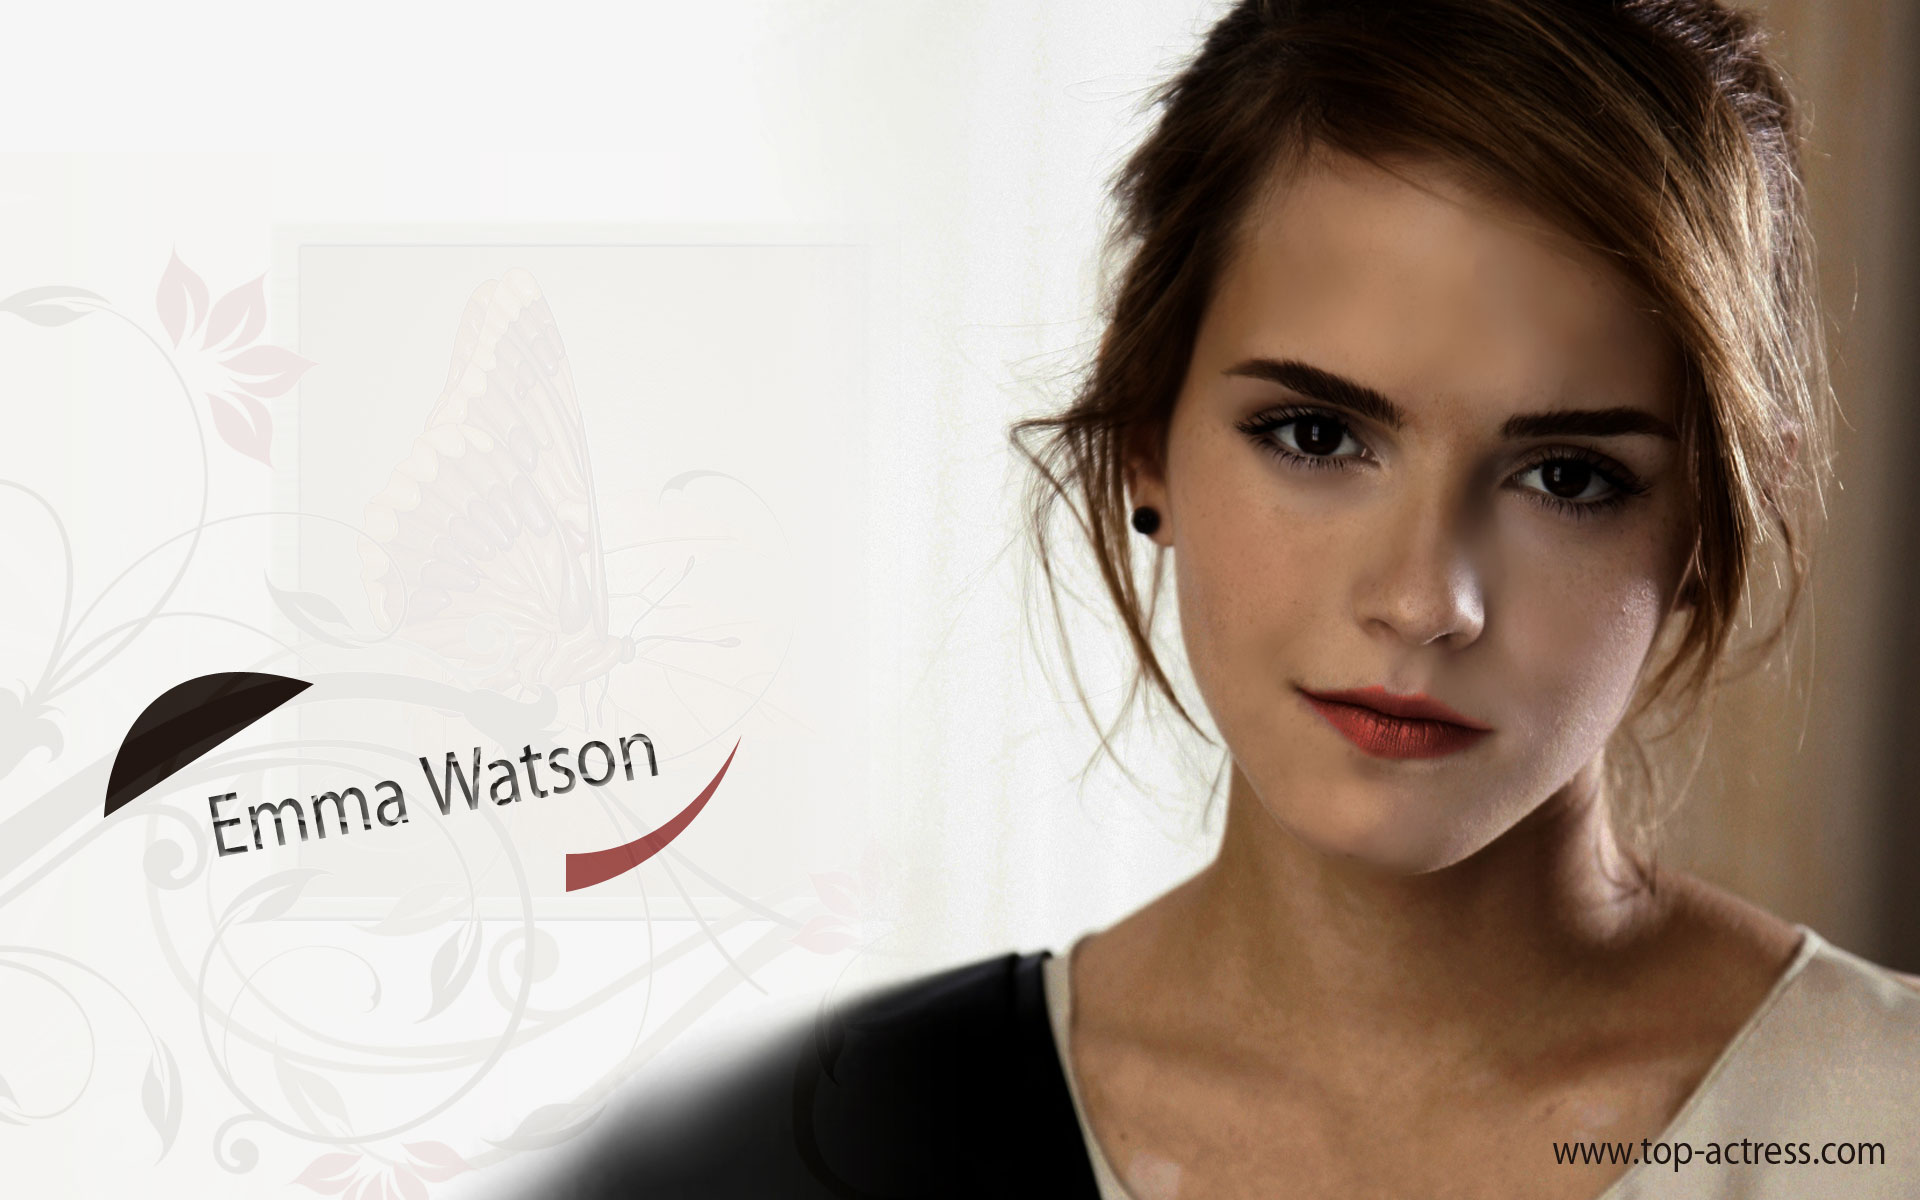 [47+] Emma Watson Wallpapers 2014 | WallpaperSafari